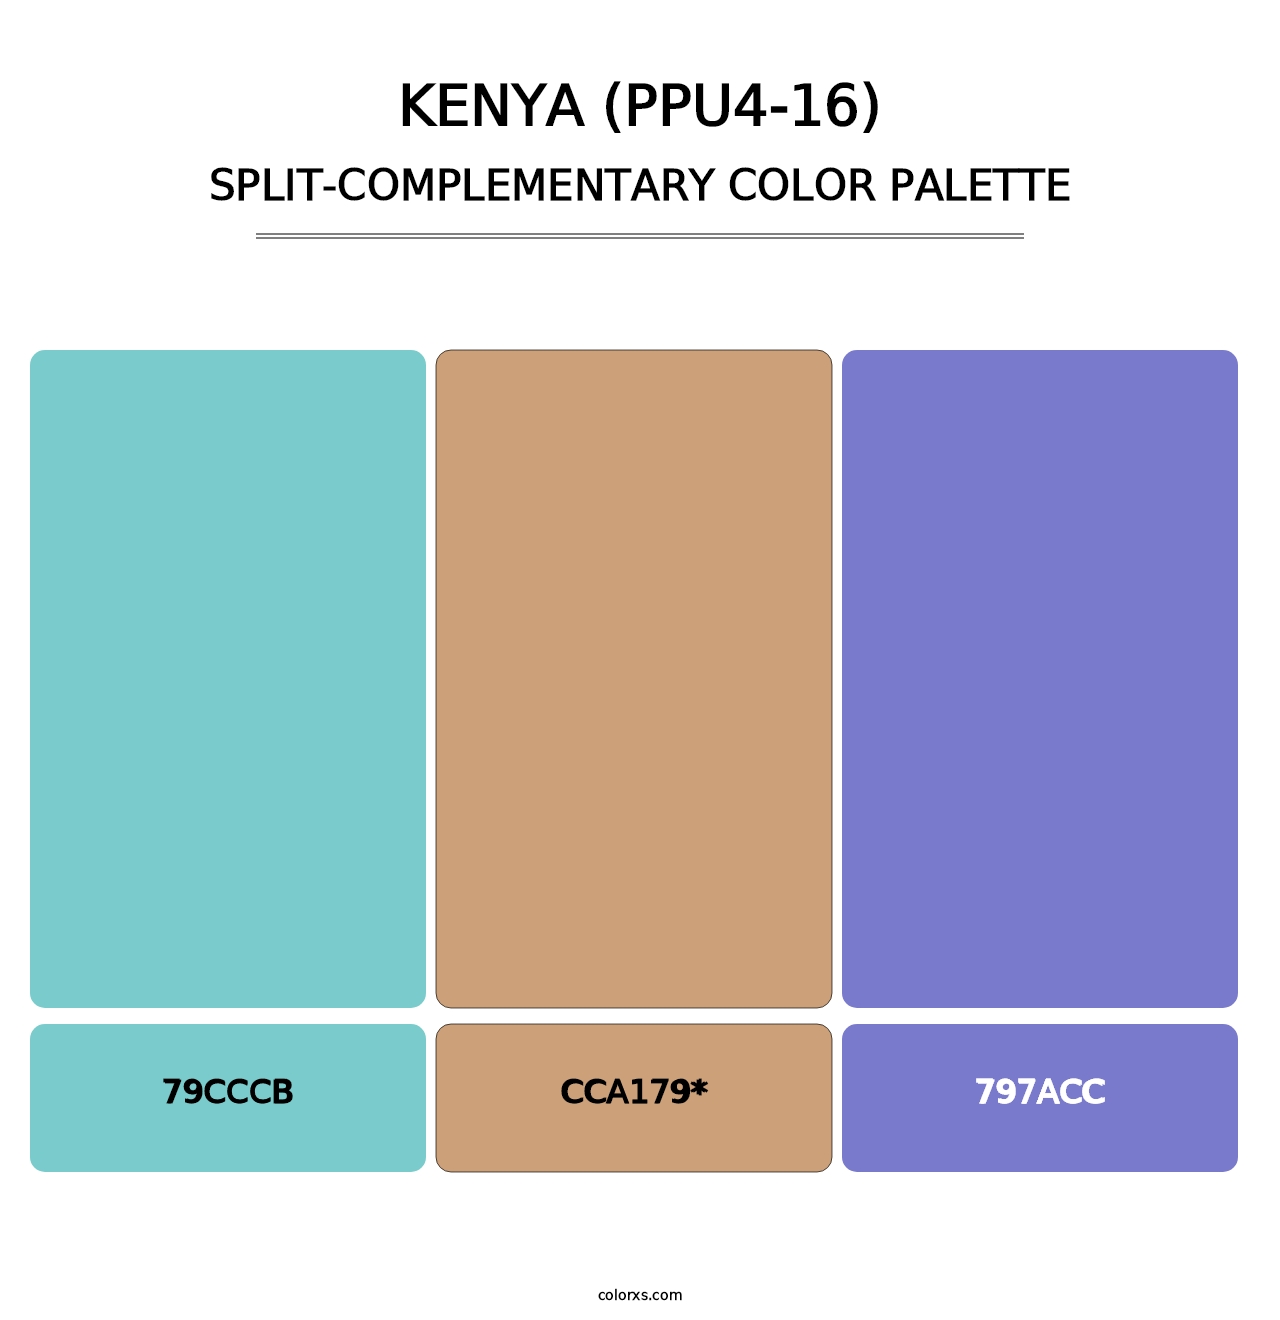 Kenya (PPU4-16) - Split-Complementary Color Palette